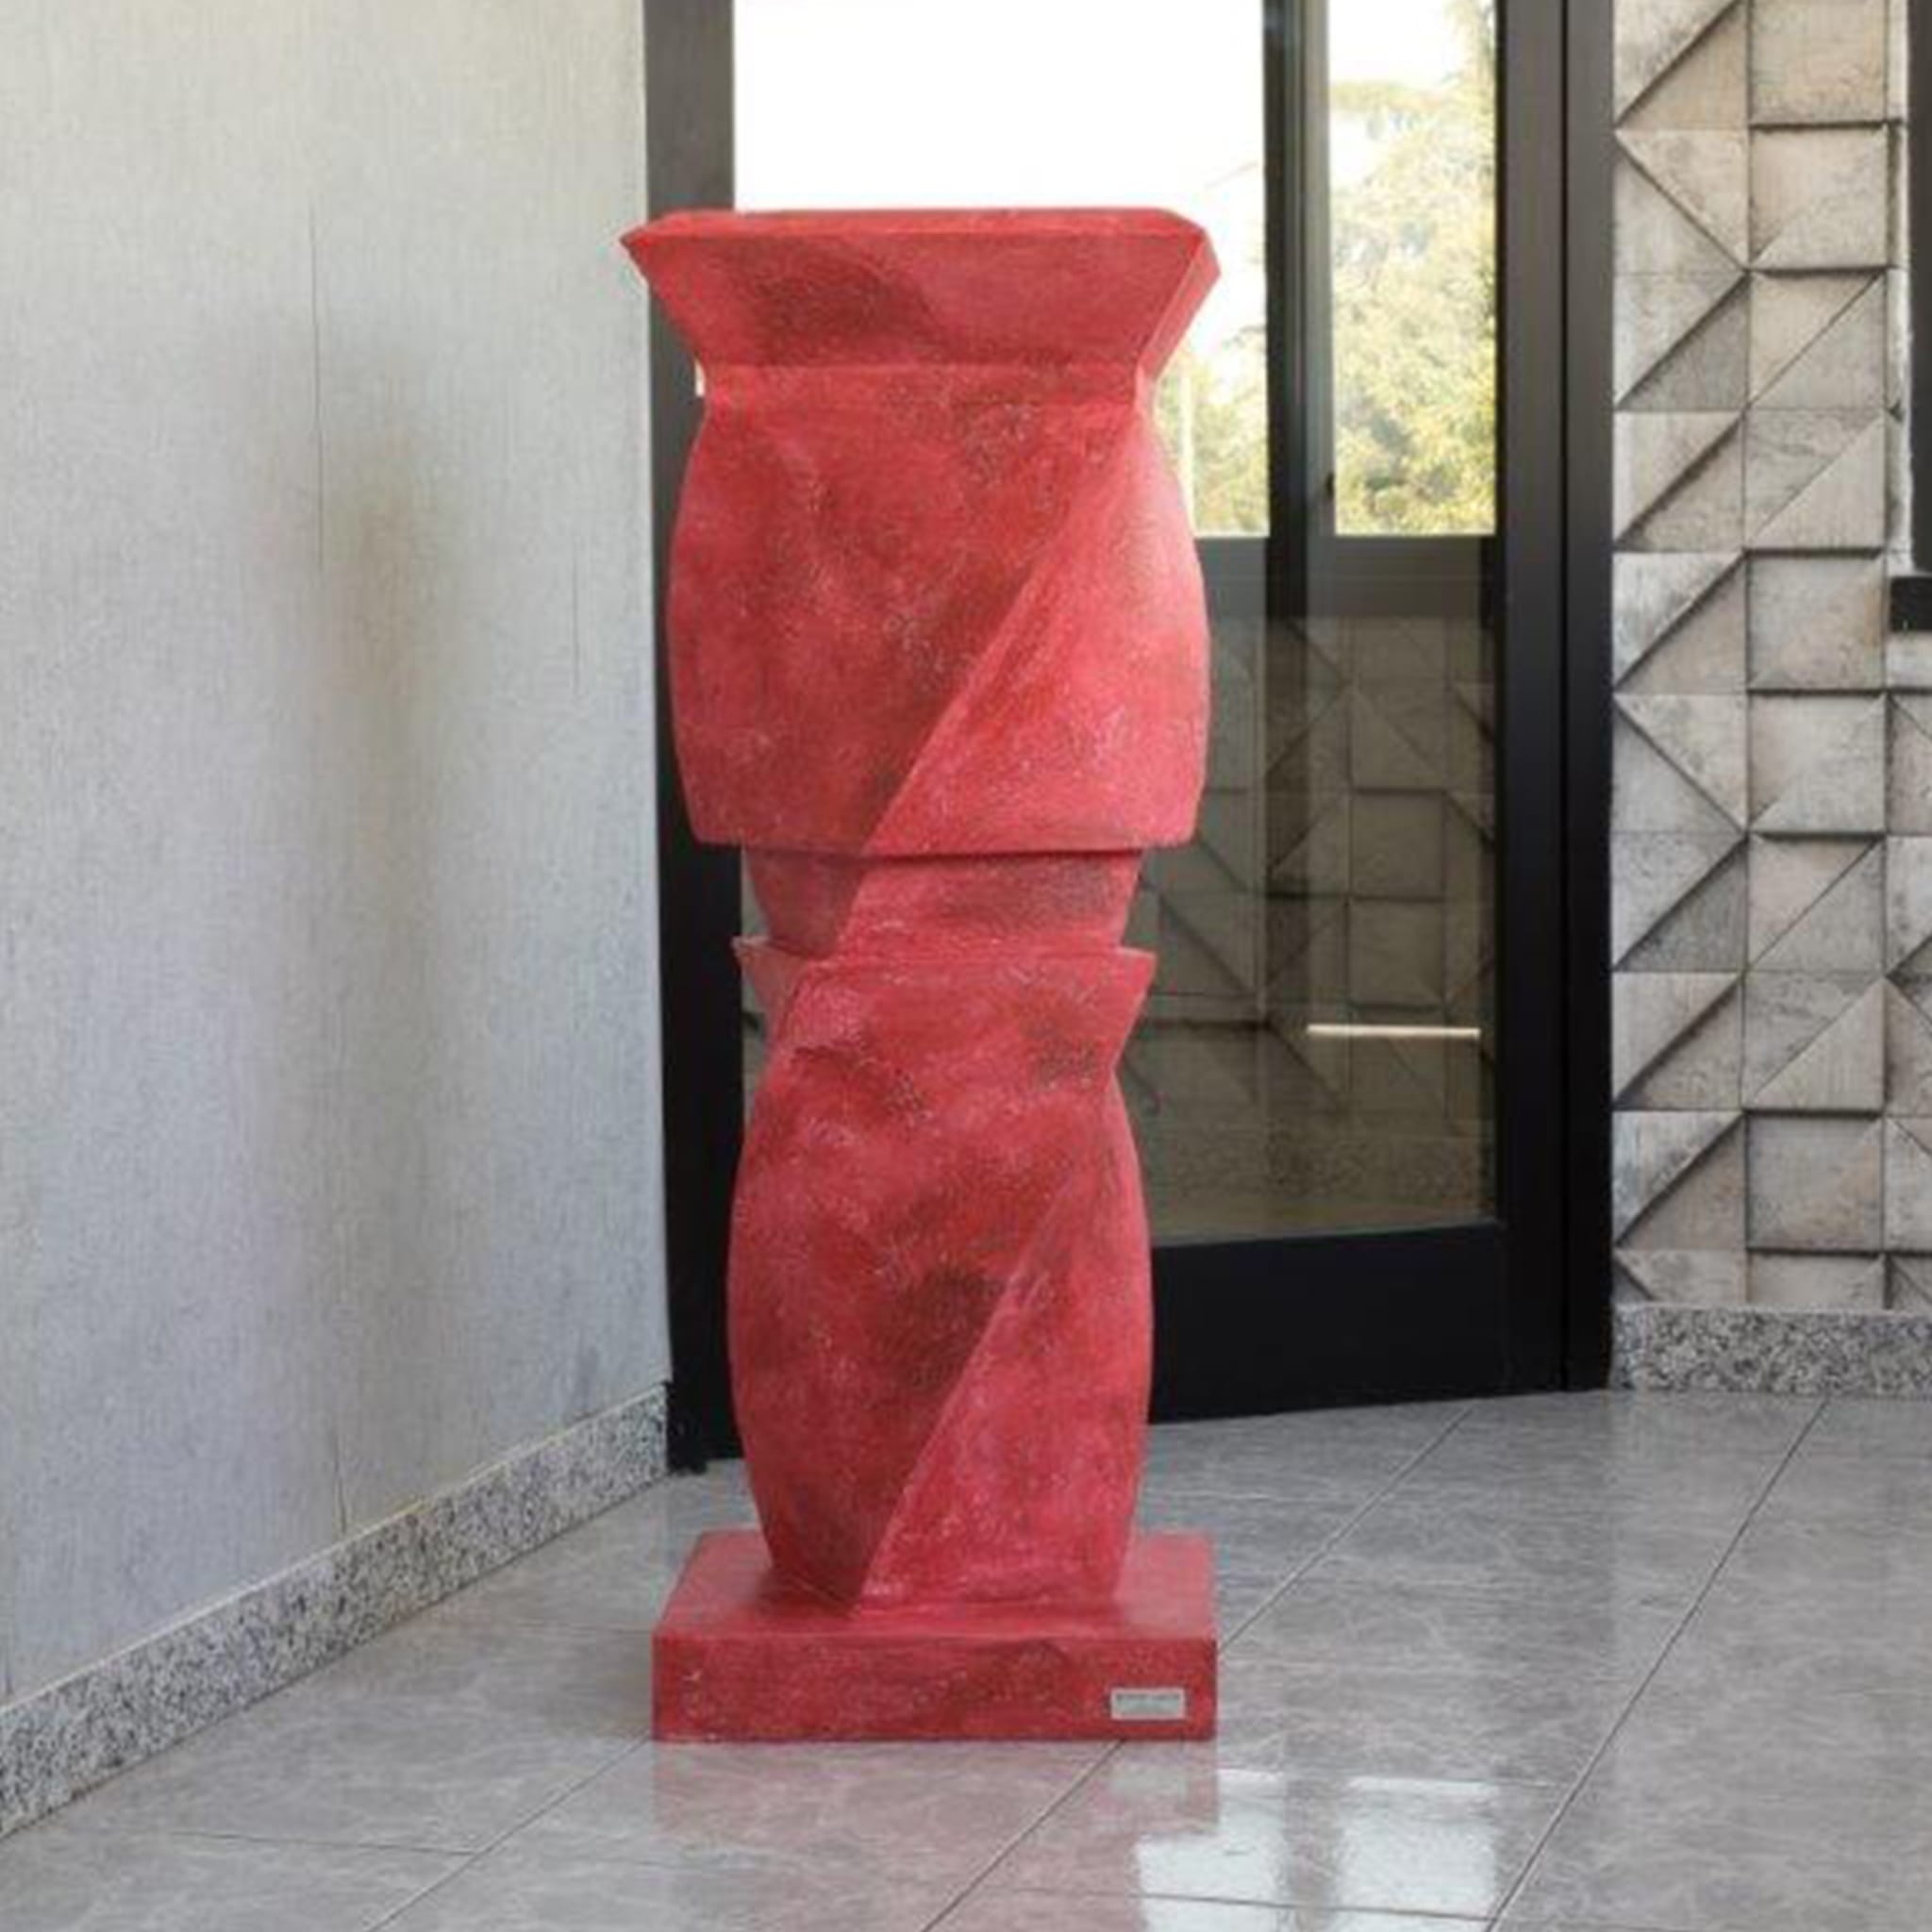 The Spiral Red Decorative Sculpture - Alternative view 3